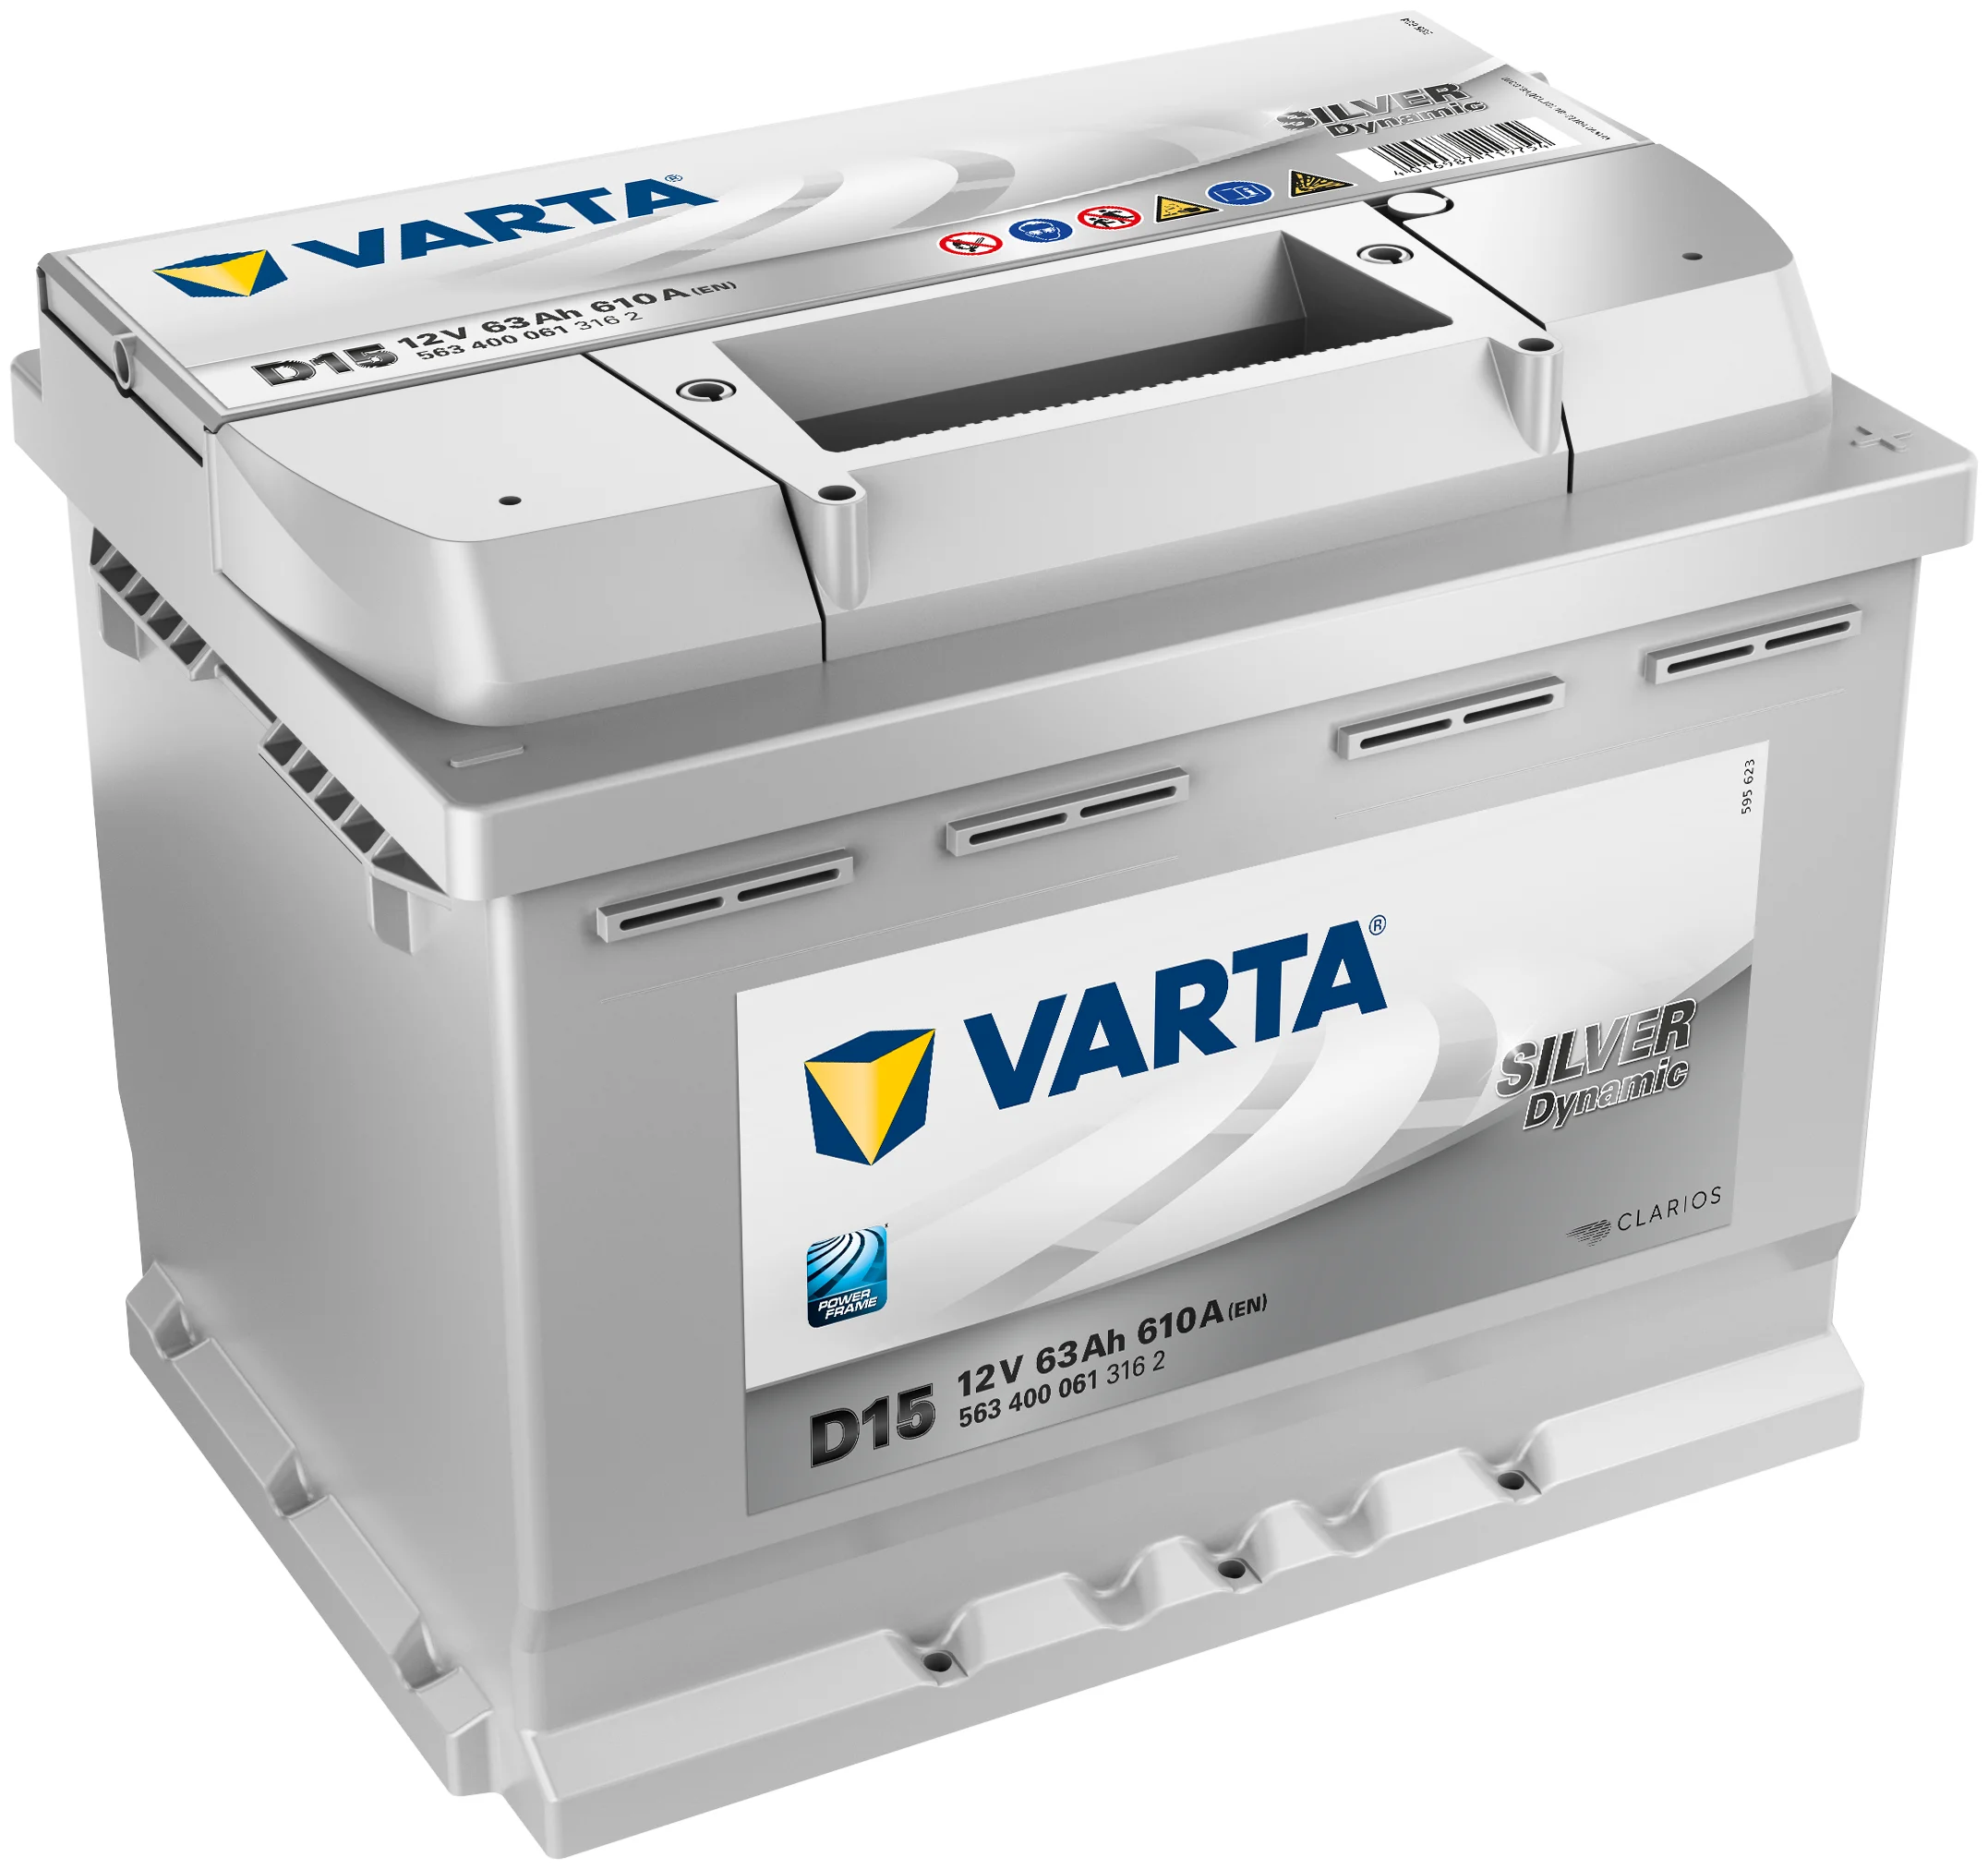 VARTA Silver Dynamic D15 (563 400 061) - тип аккумулятора: кальциевый